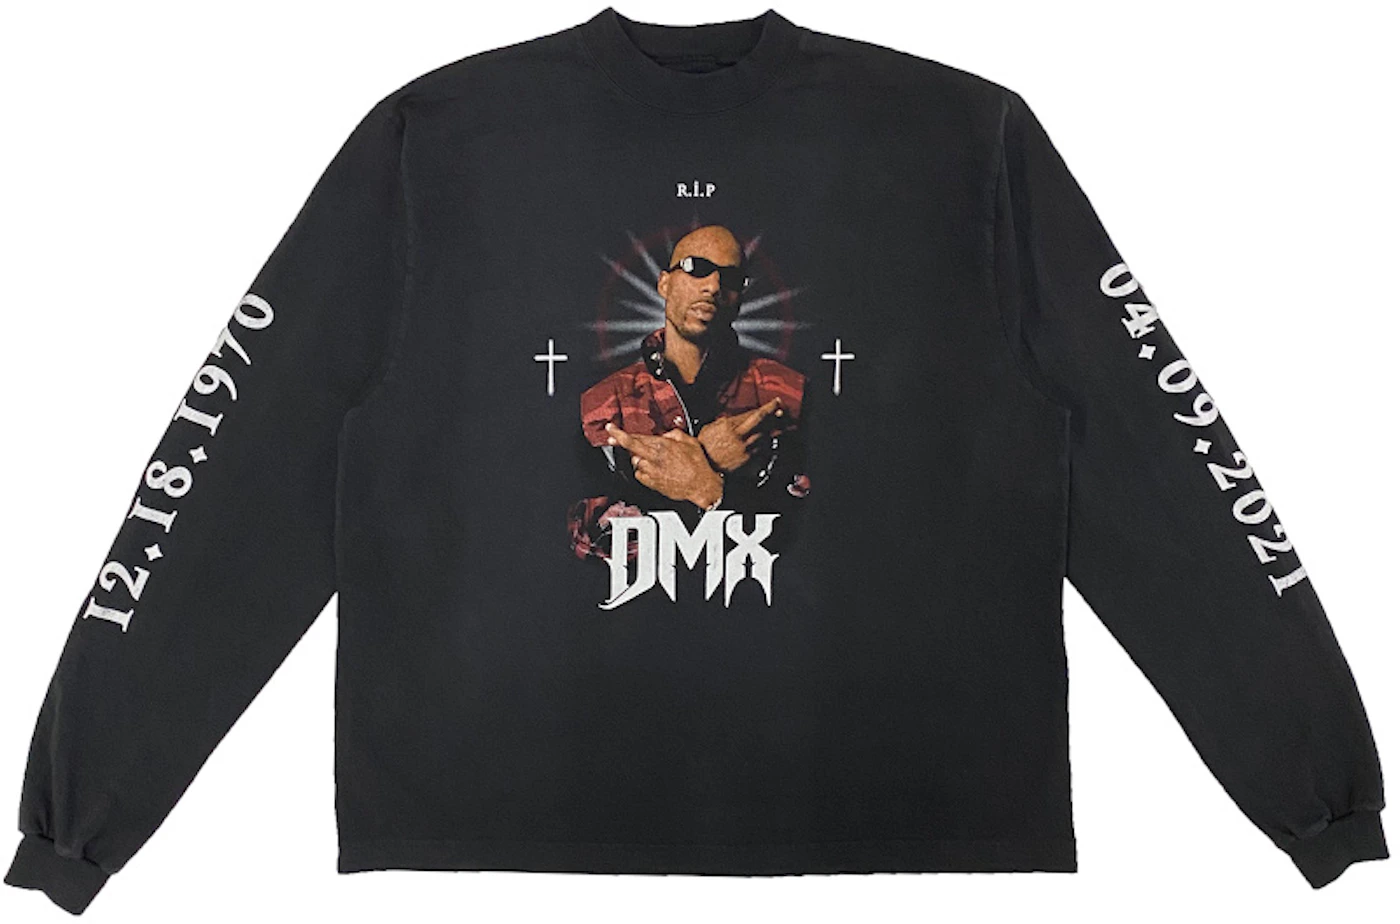 Balenciaga Yeezy DMX, A Tribute Longsleeve T-Shirt Faded Black SS21 - US